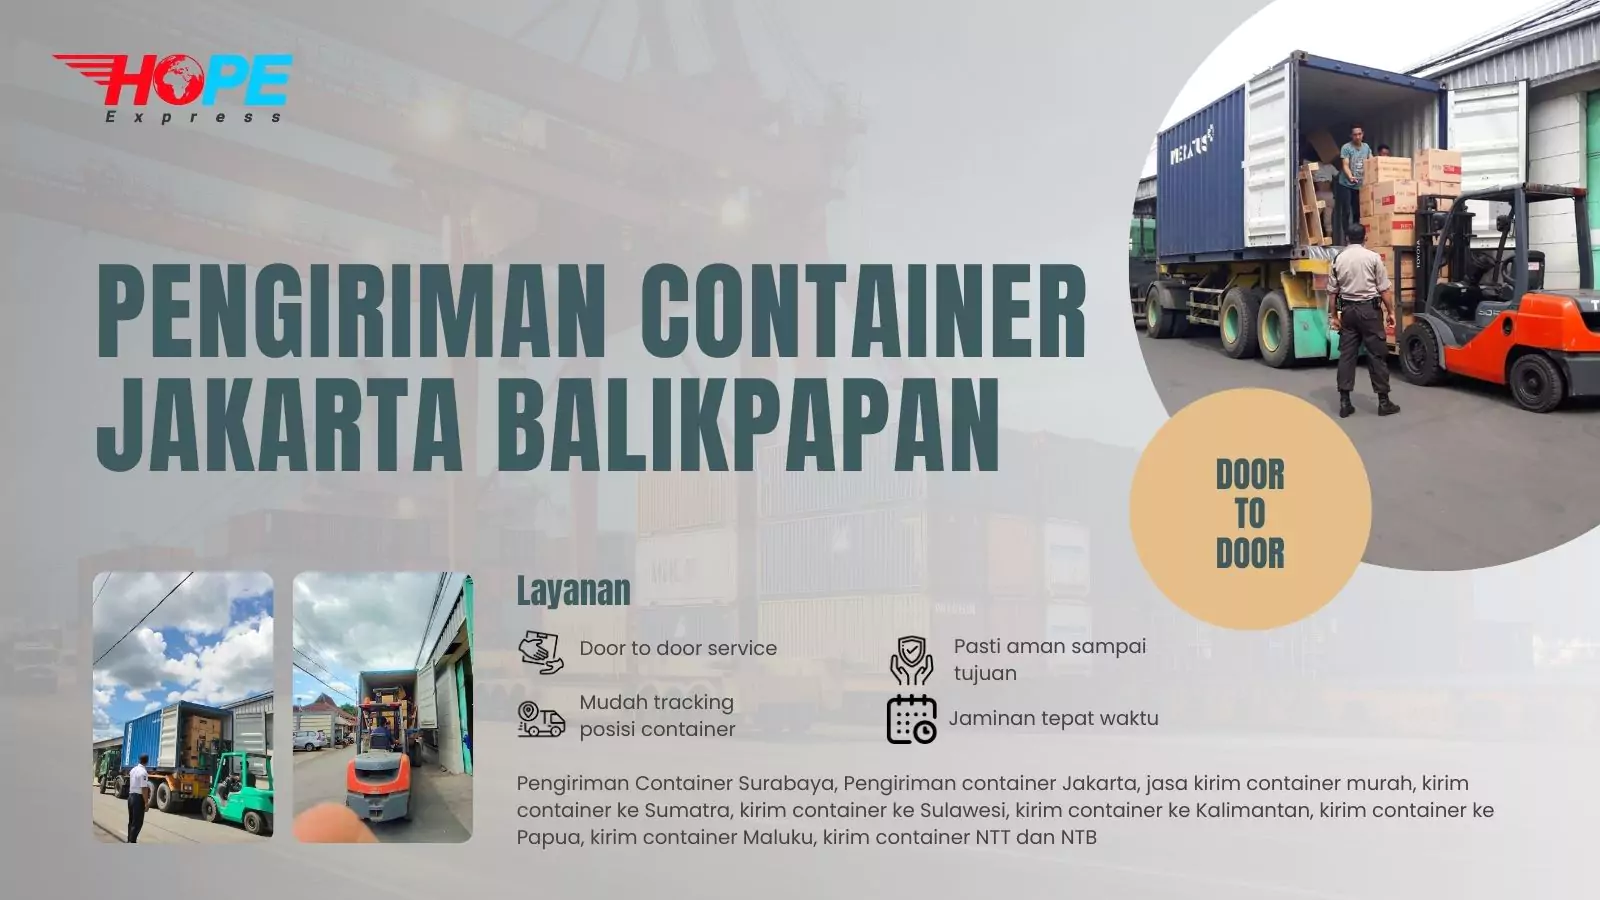 Pengiriman Container Jakarta Balikpapan